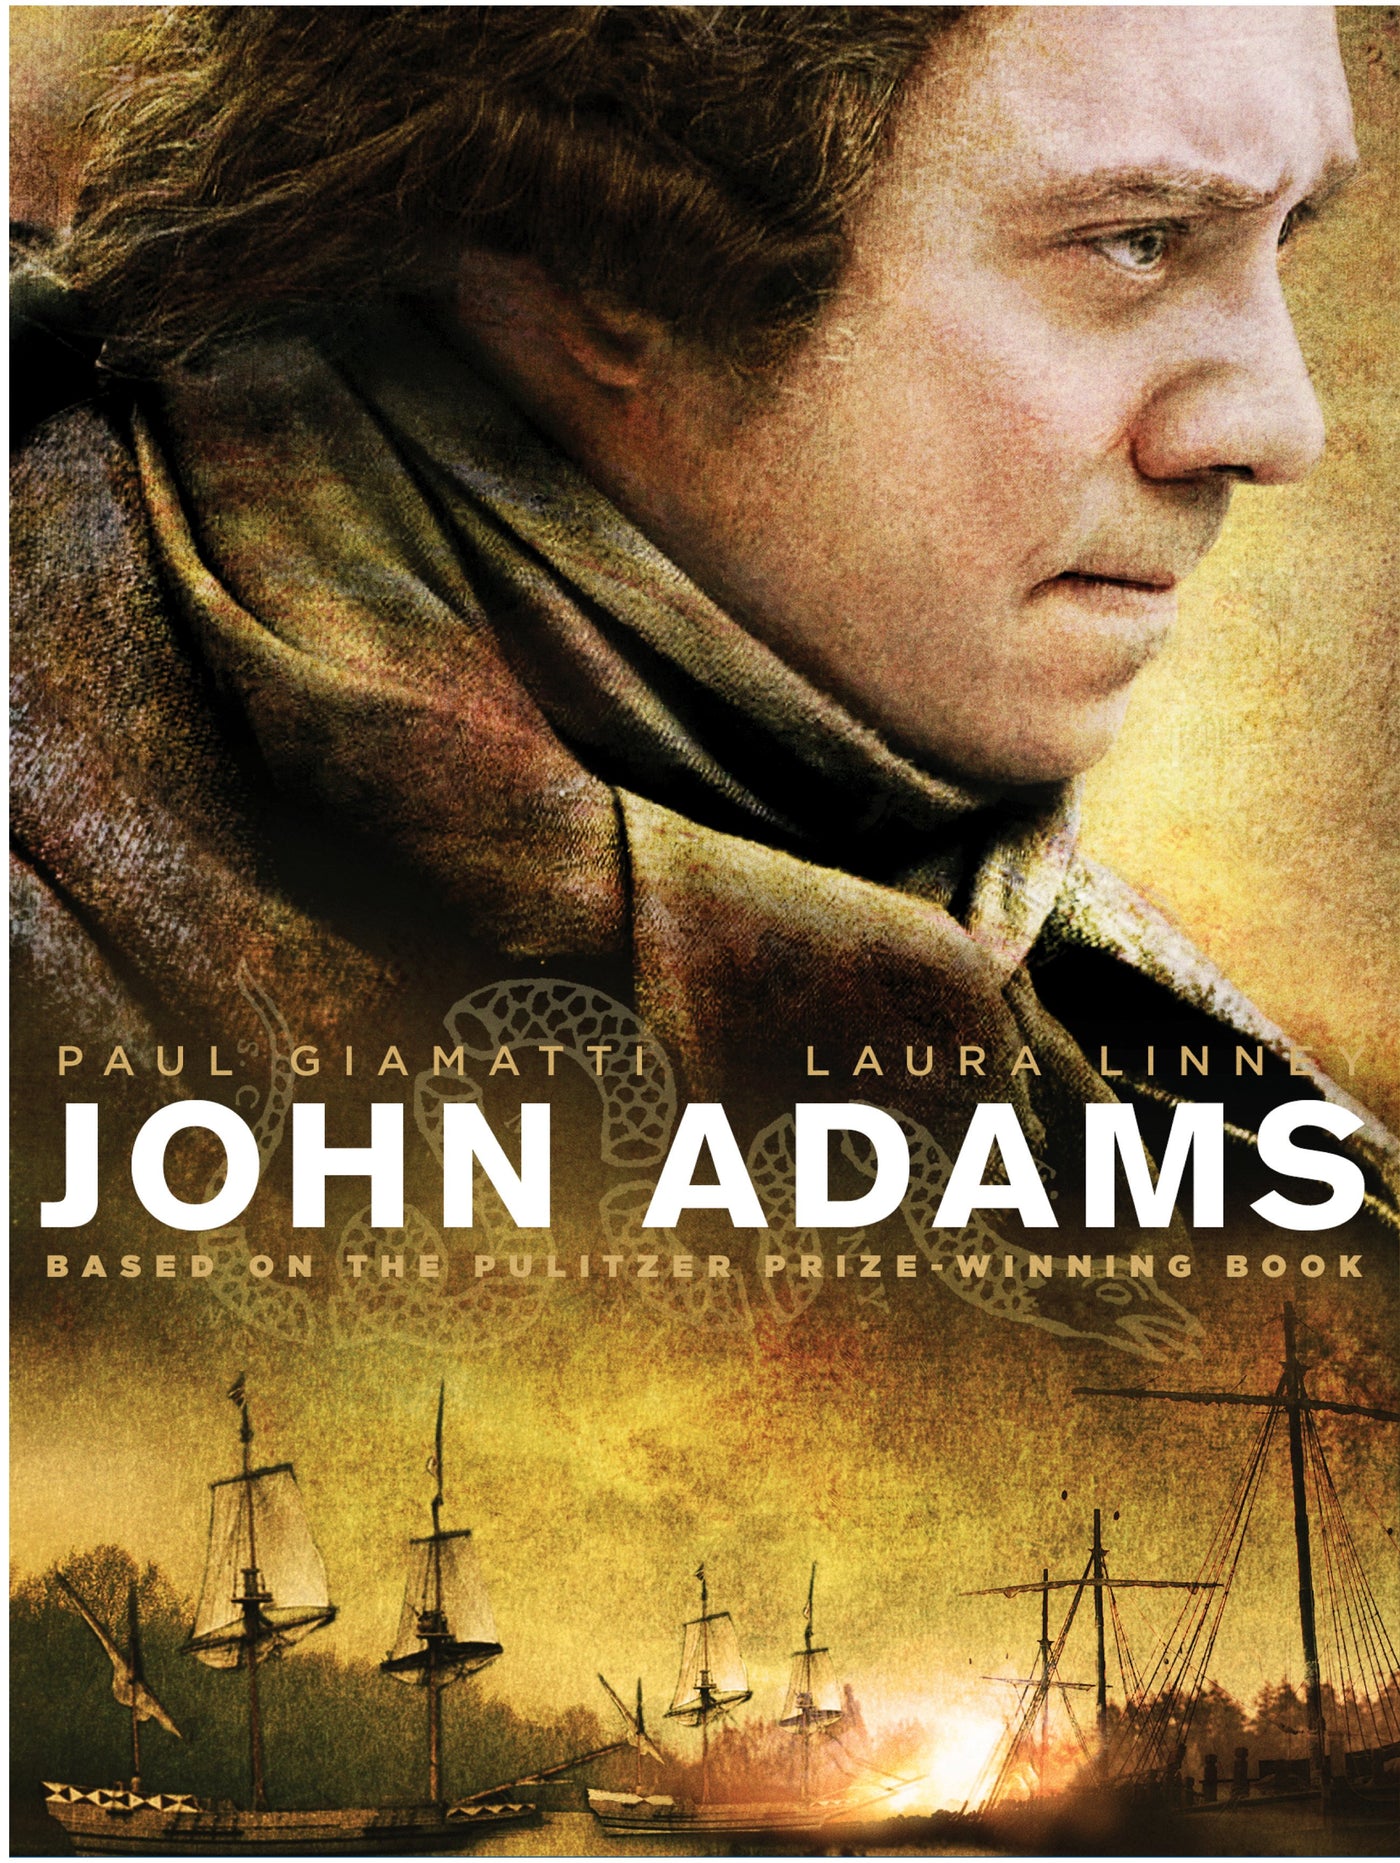 John Adams - The Complete HBO Series [2009] (DVD)